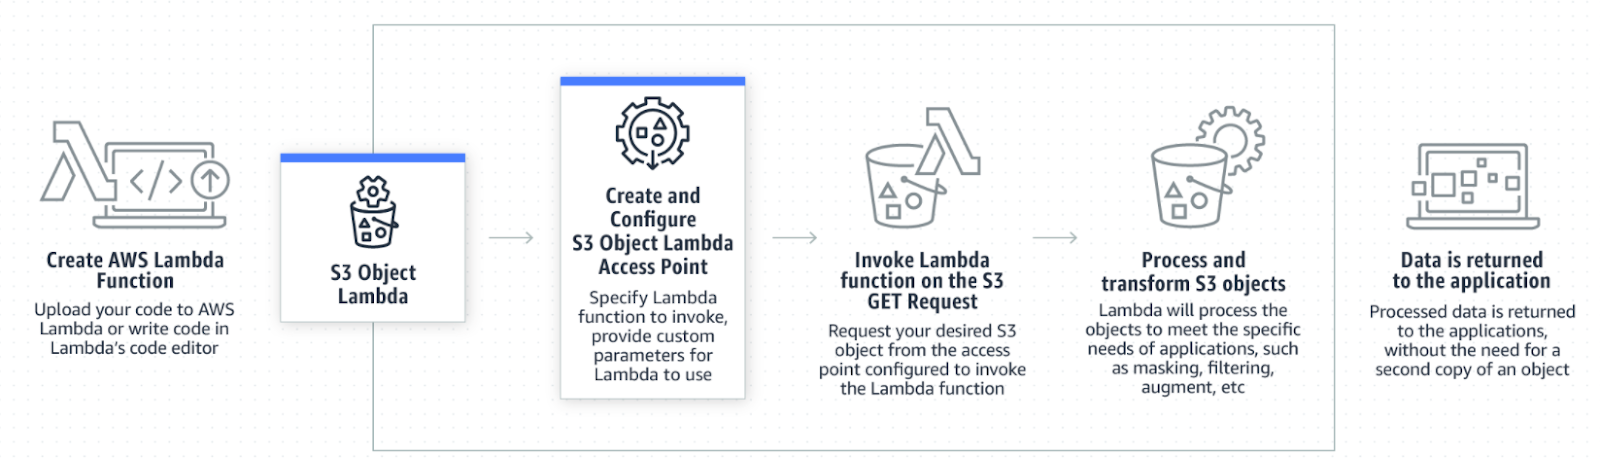 Amazon Redshift Data Lake Export - S3 Object Lambda Diagram